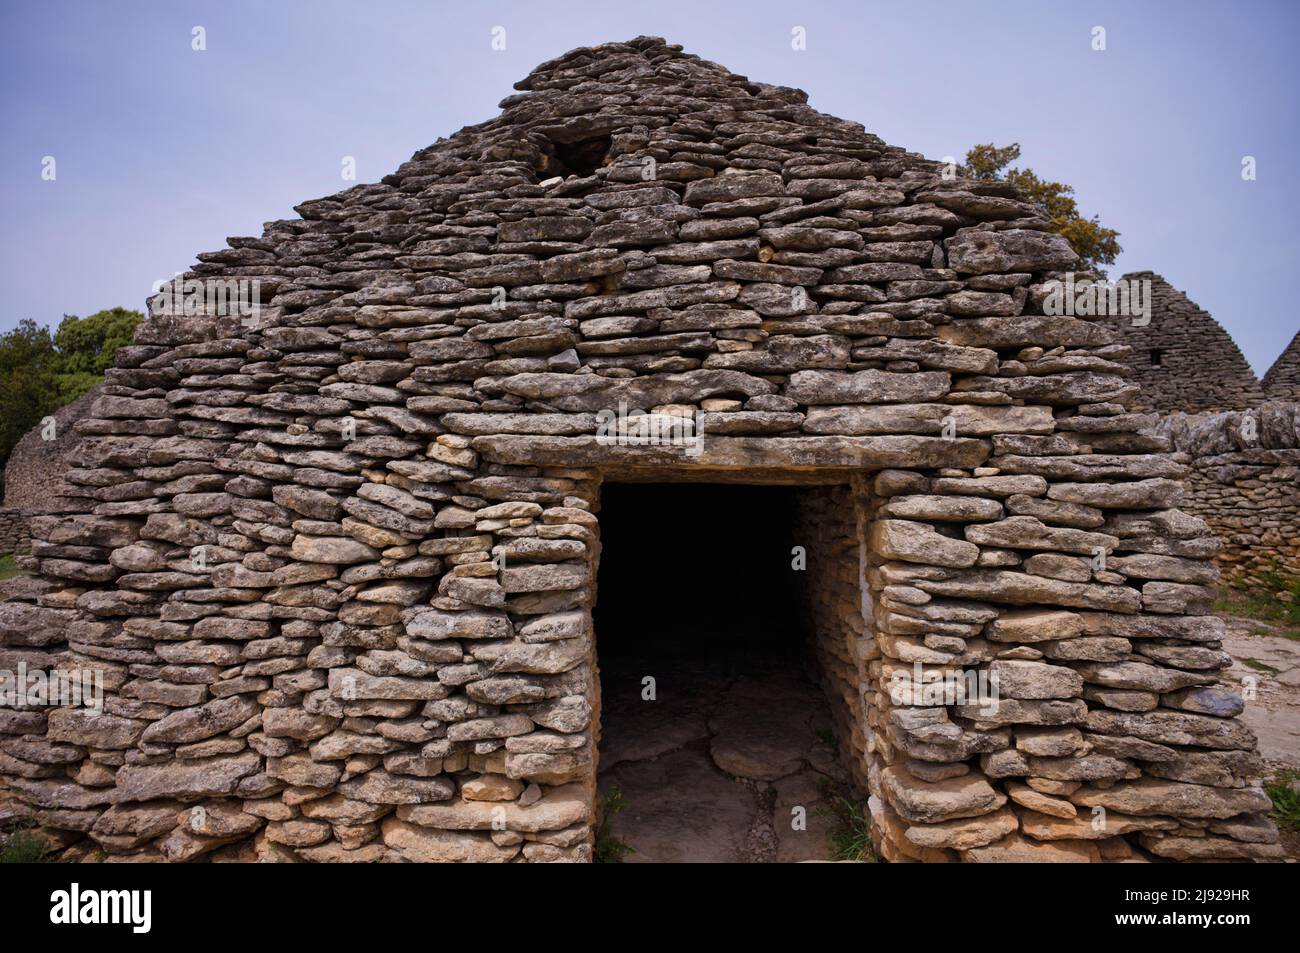 Dwelling, Dry stone roundhouses, Village des Bories, Village of stone huts, Open-air museum, Gordes, Vaucluse, Provence-Alpes-Cote d'Azur, France Stock Photo